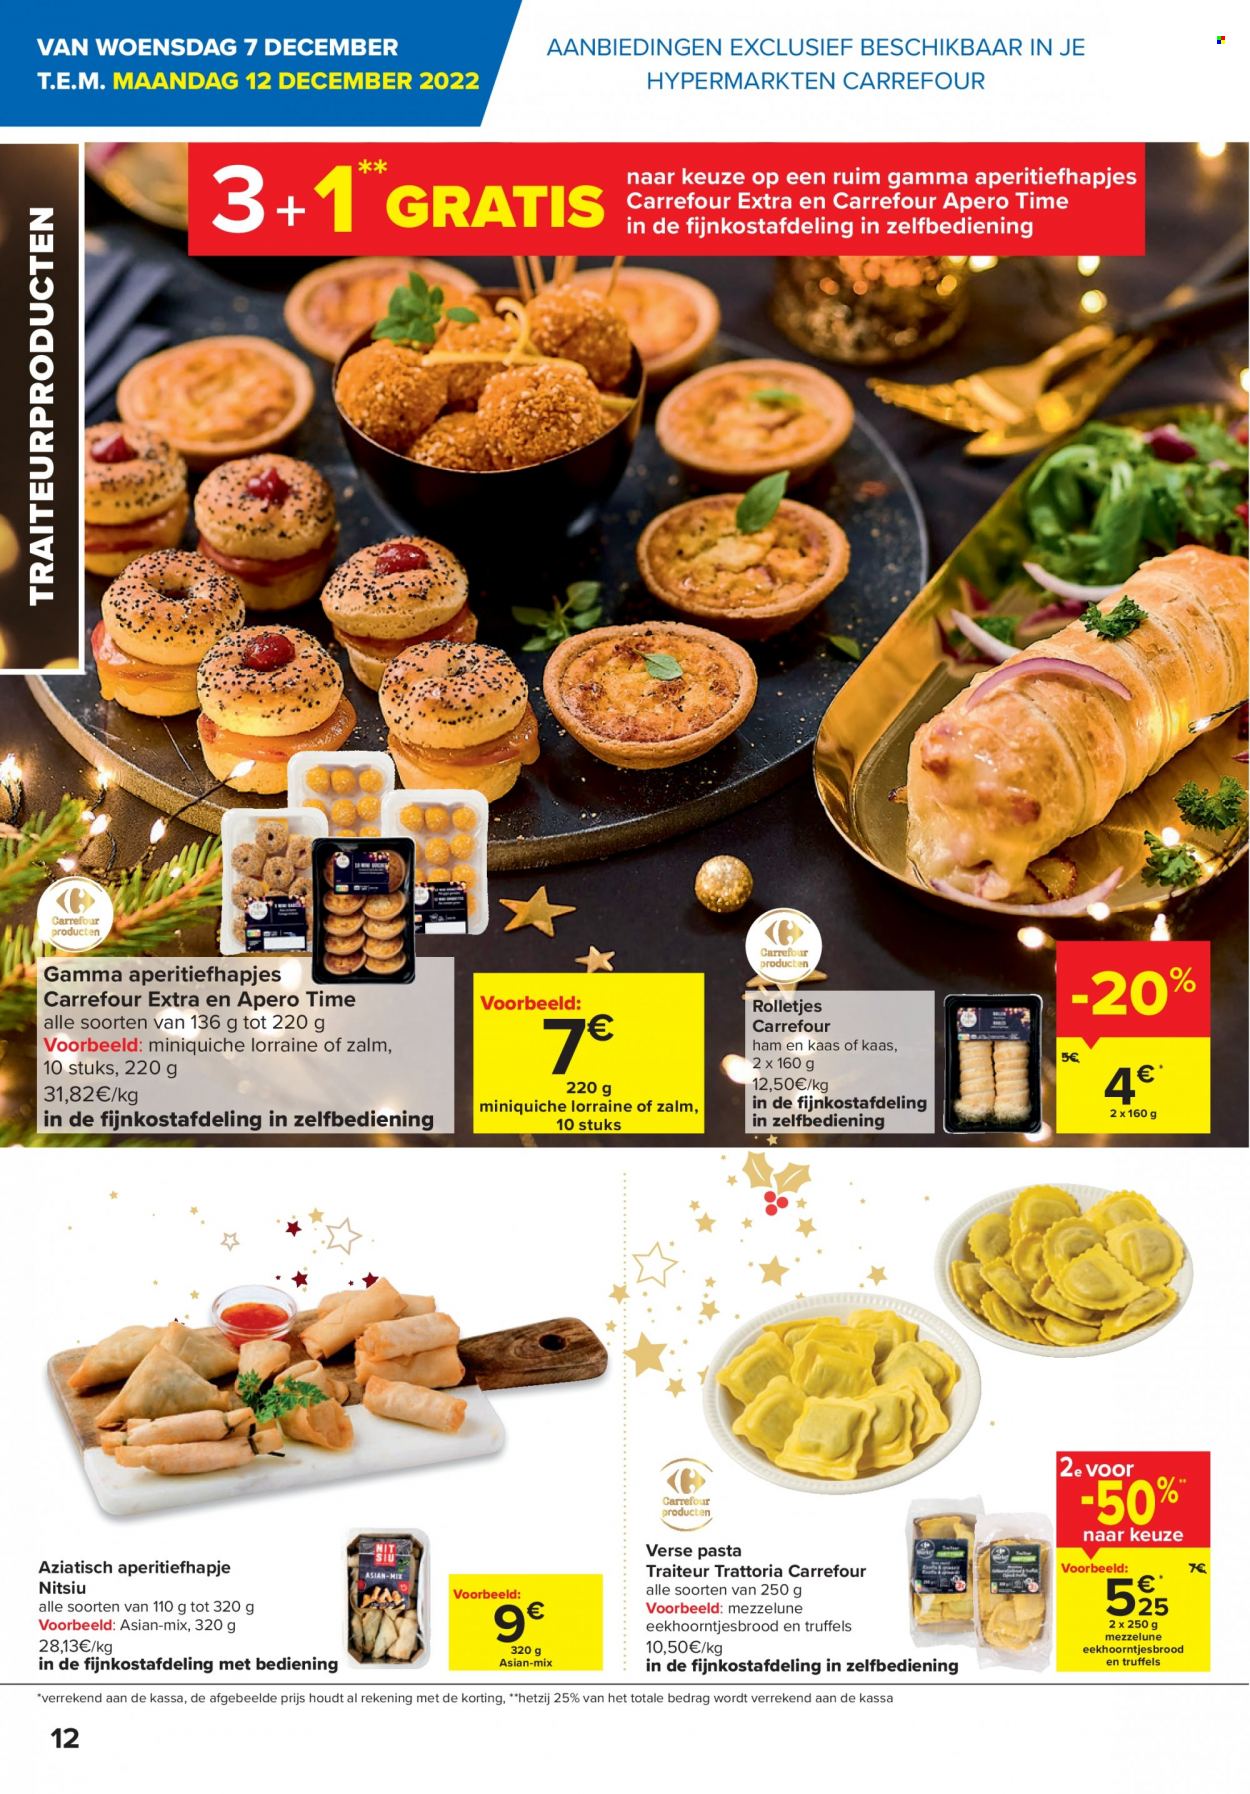 thumbnail - Carrefour hypermarkt-aanbieding - 07/12/2022 - 02/01/2023 -  producten in de aanbieding - eekhoorntjesbrood, Gamma, rolletjes, zalm, ham, aperitiefhapjes, kaas, pasta. Pagina 12.